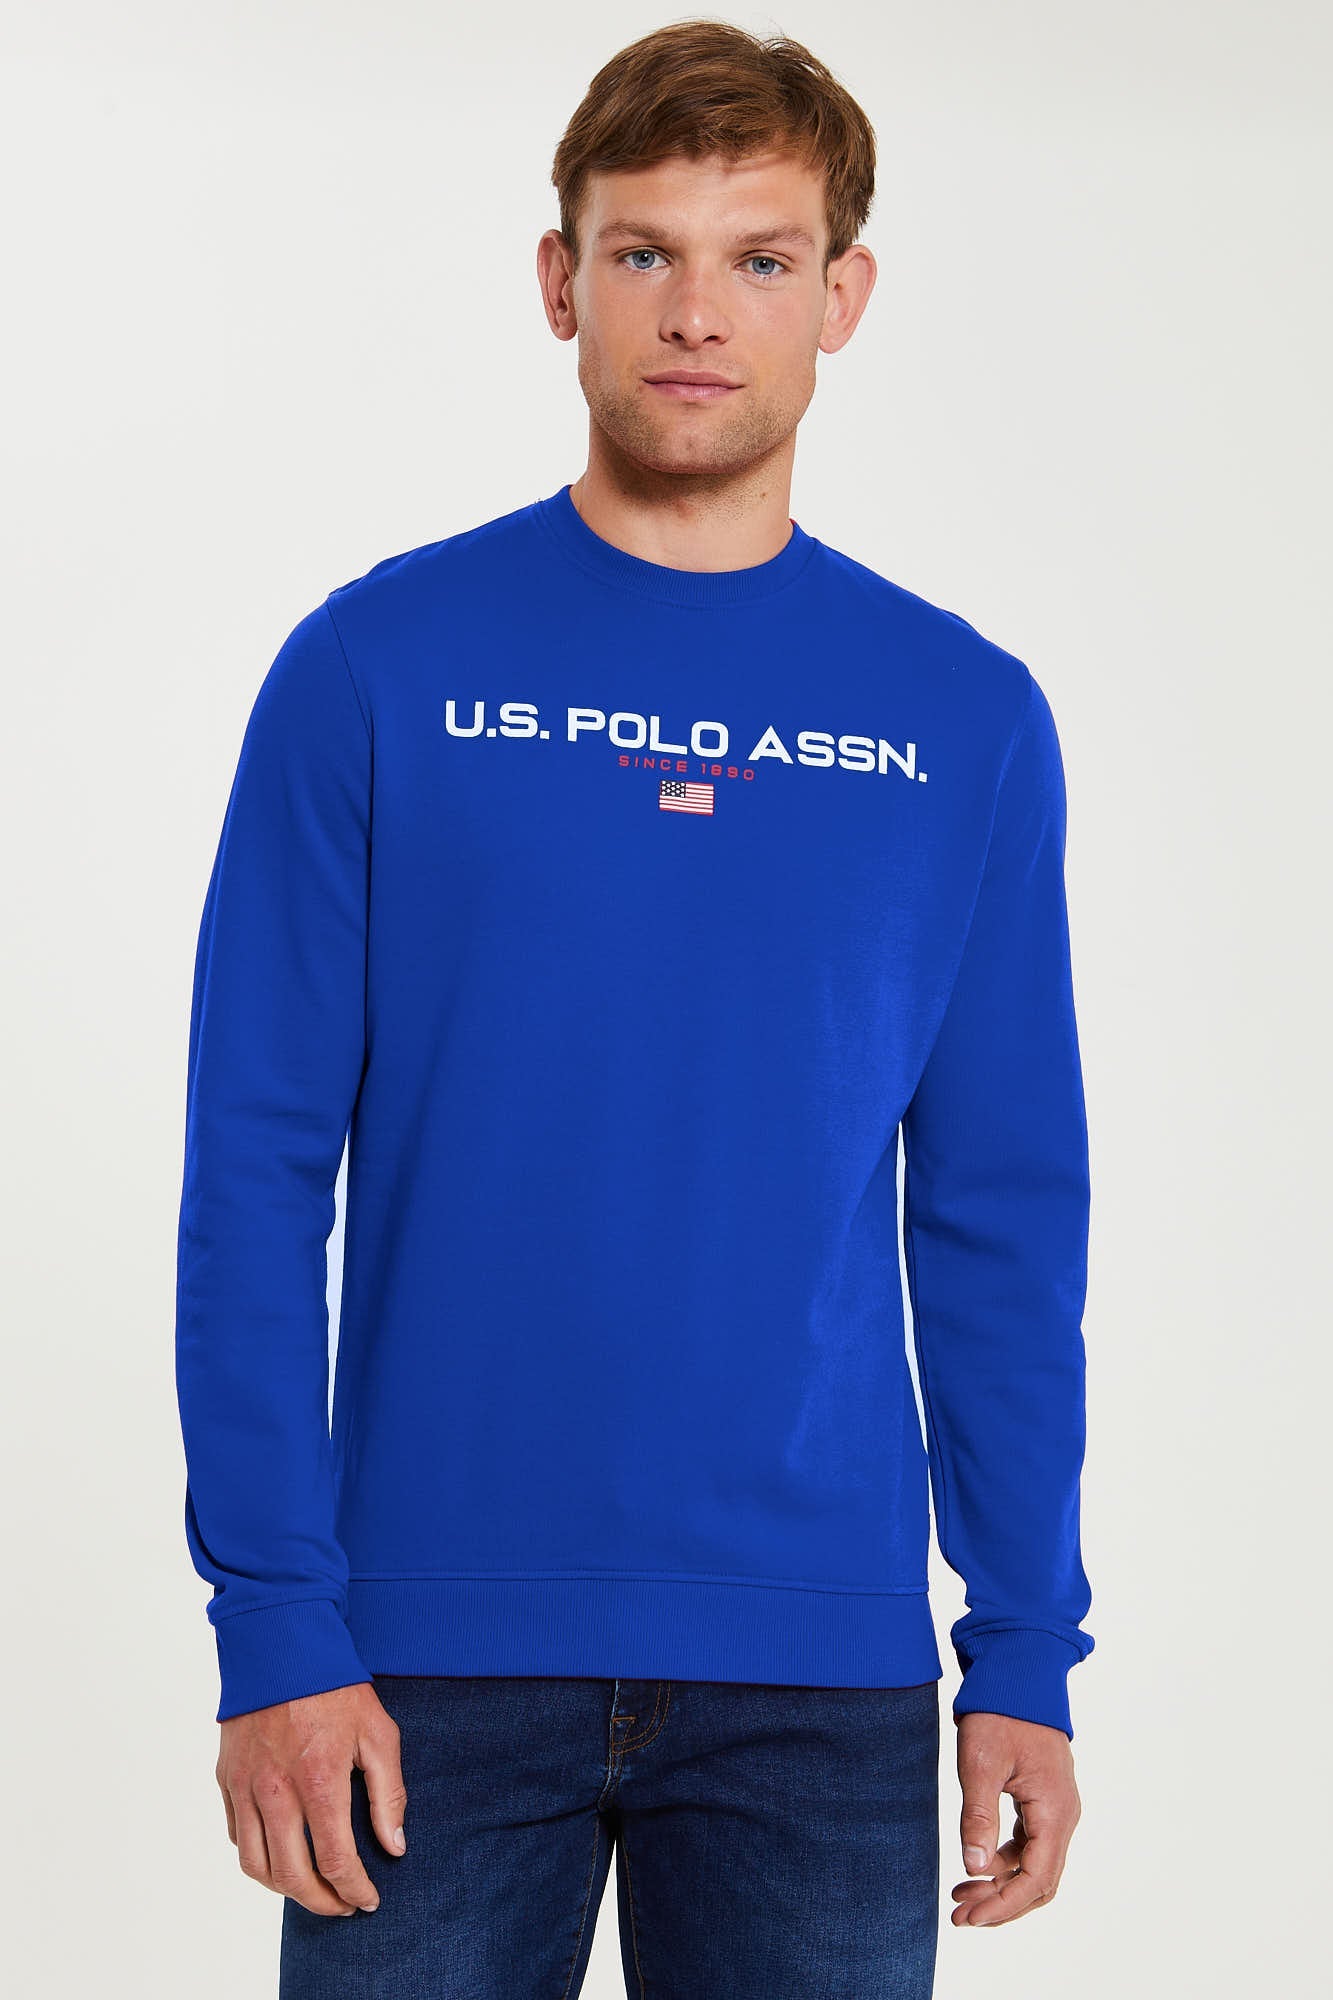 U.S. Polo Assn. Mens Block Flag Graphic Crew Neck Sweatshirt in Classic Blue